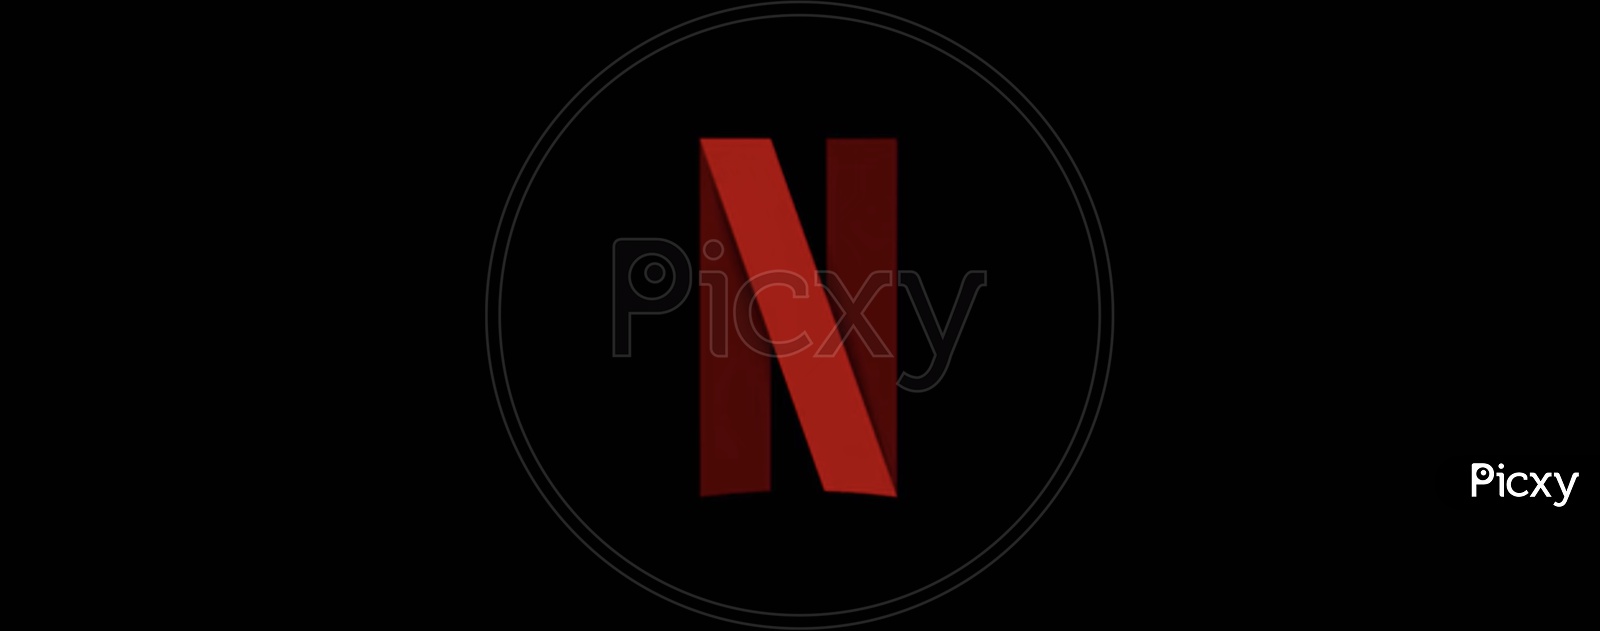 Netflix Brand Logo appearing in Netflix Originals